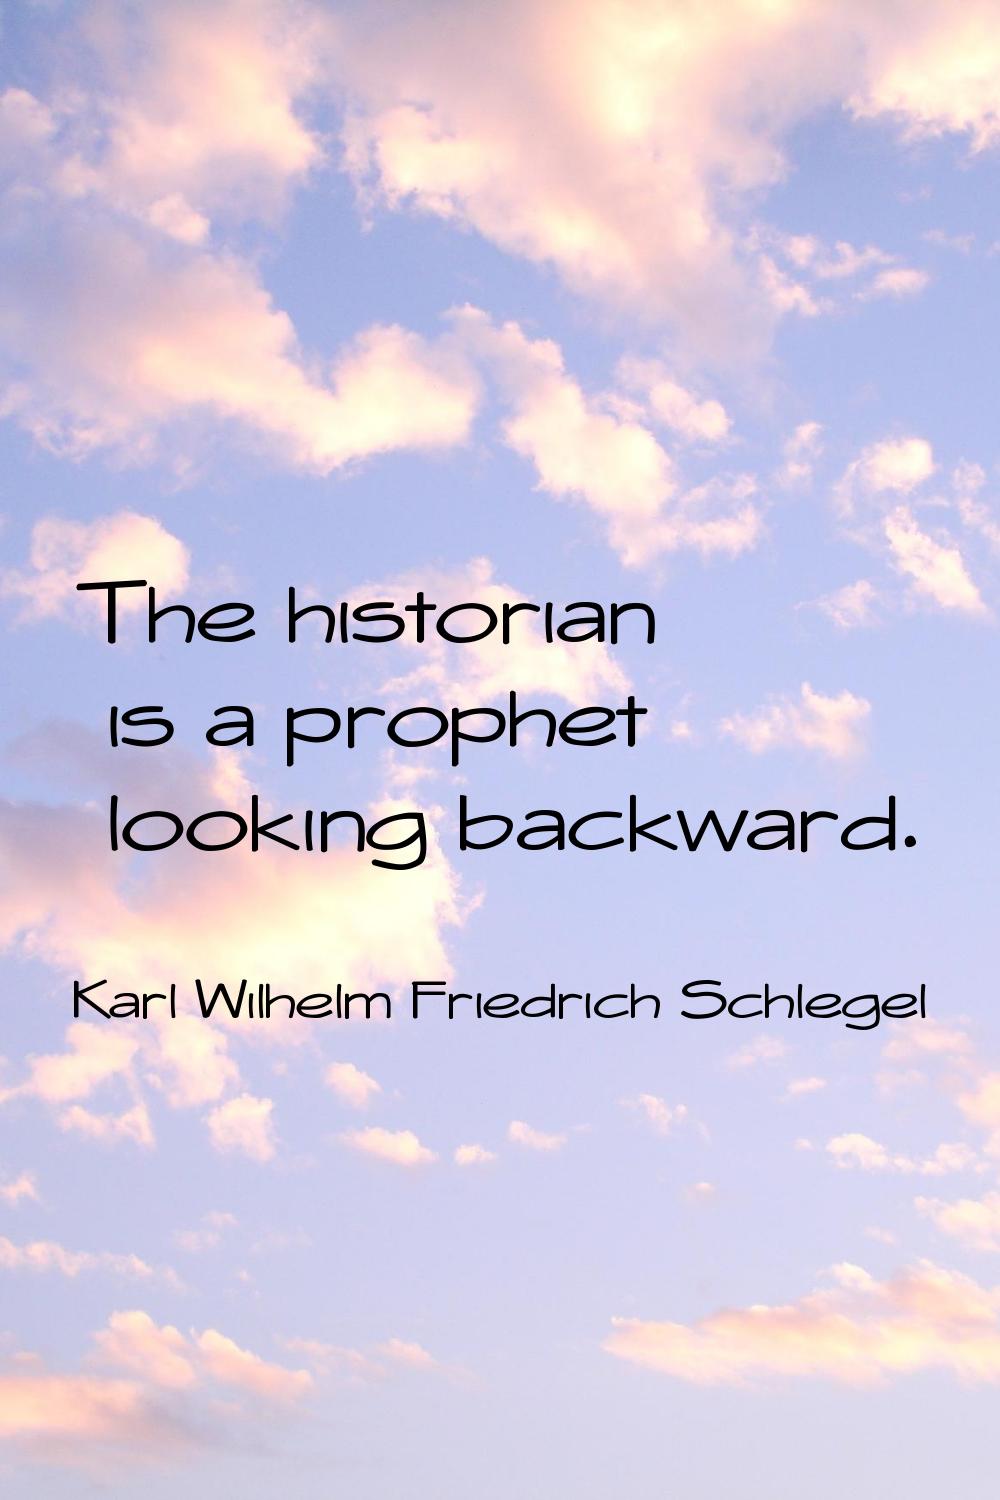 The historian is a prophet looking backward.